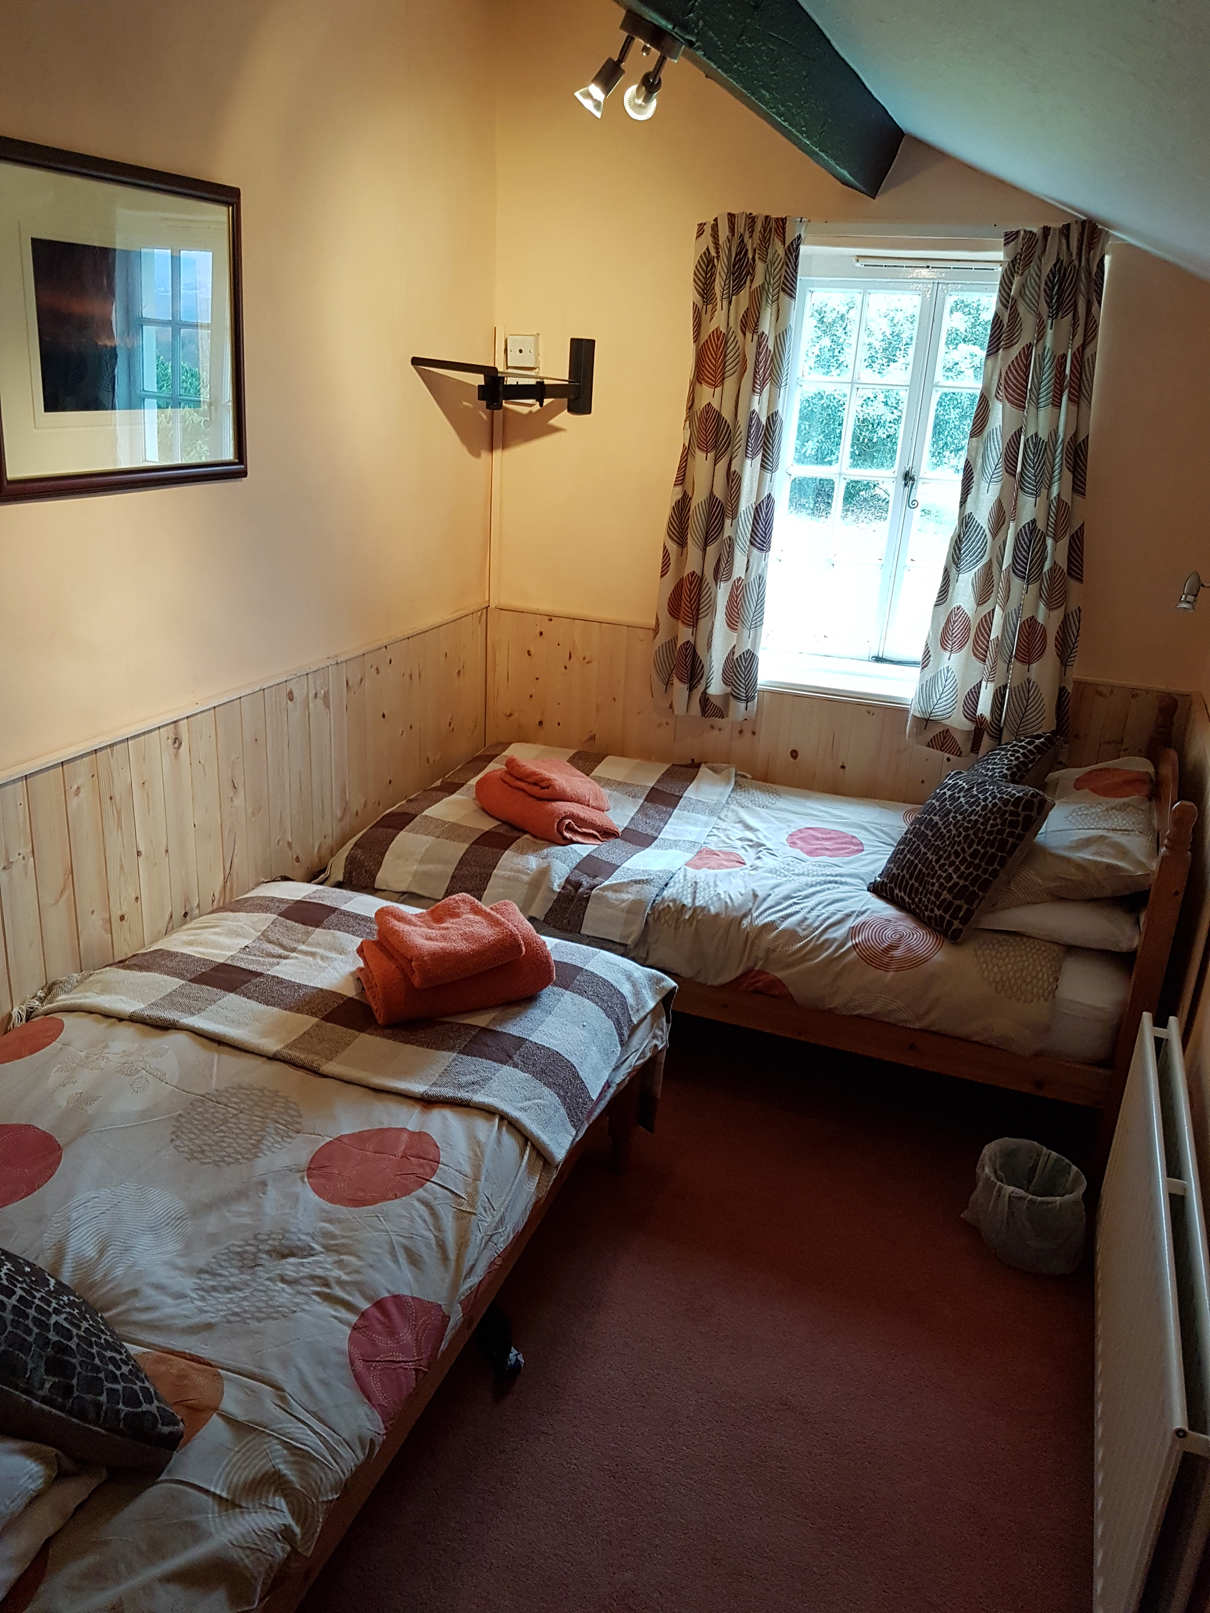 Betty Fold Self Catering Apartment near Hawkshead Lake District